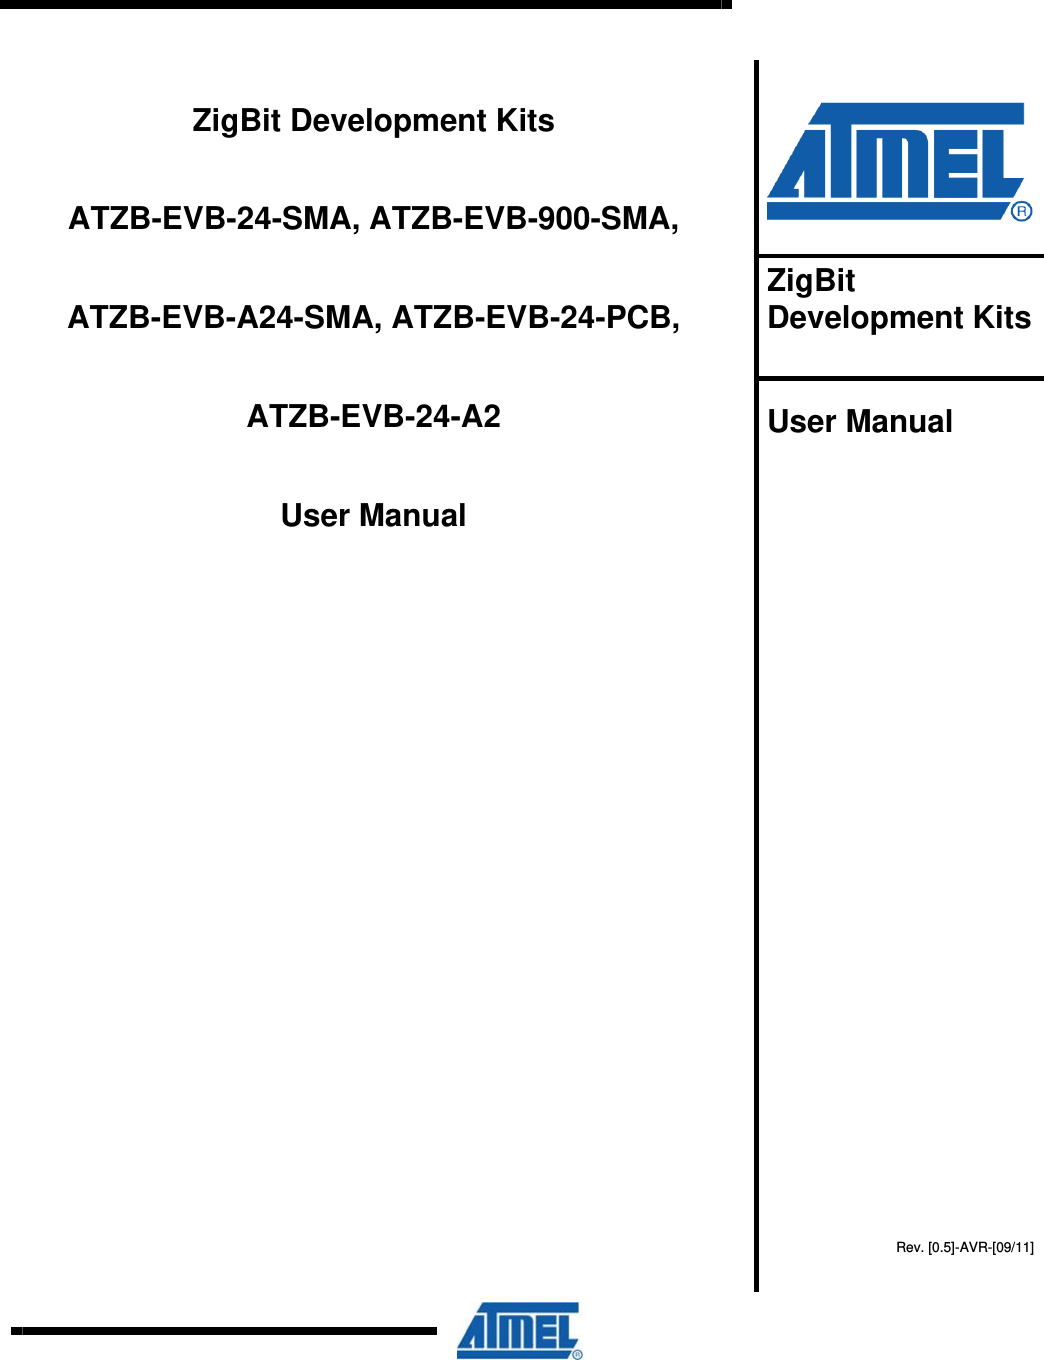     ZigBit Development Kits ATZB-EVB-24-SMA, ATZB-EVB-900-SMA,  ATZB-EVB-A24-SMA, ATZB-EVB-24-PCB,  ATZB-EVB-24-A2 User Manual       ZigBit Development Kits  User Manual    Rev. [0.5]-AVR-[09/11] 